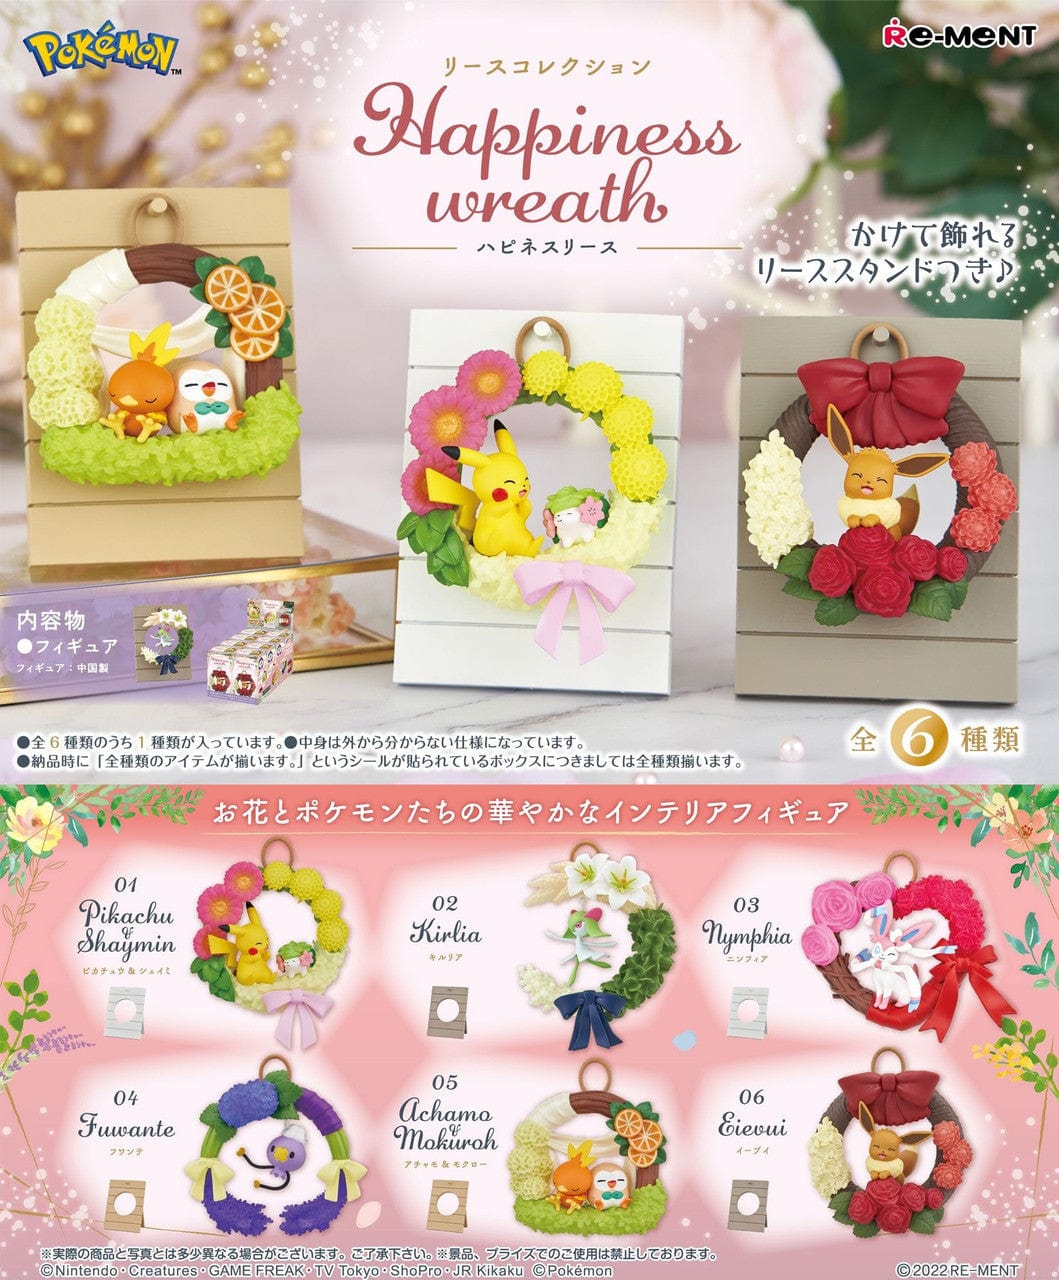 JBK Rement Pokemon Happiness Wreath Surprise Box Kawaii Gifts